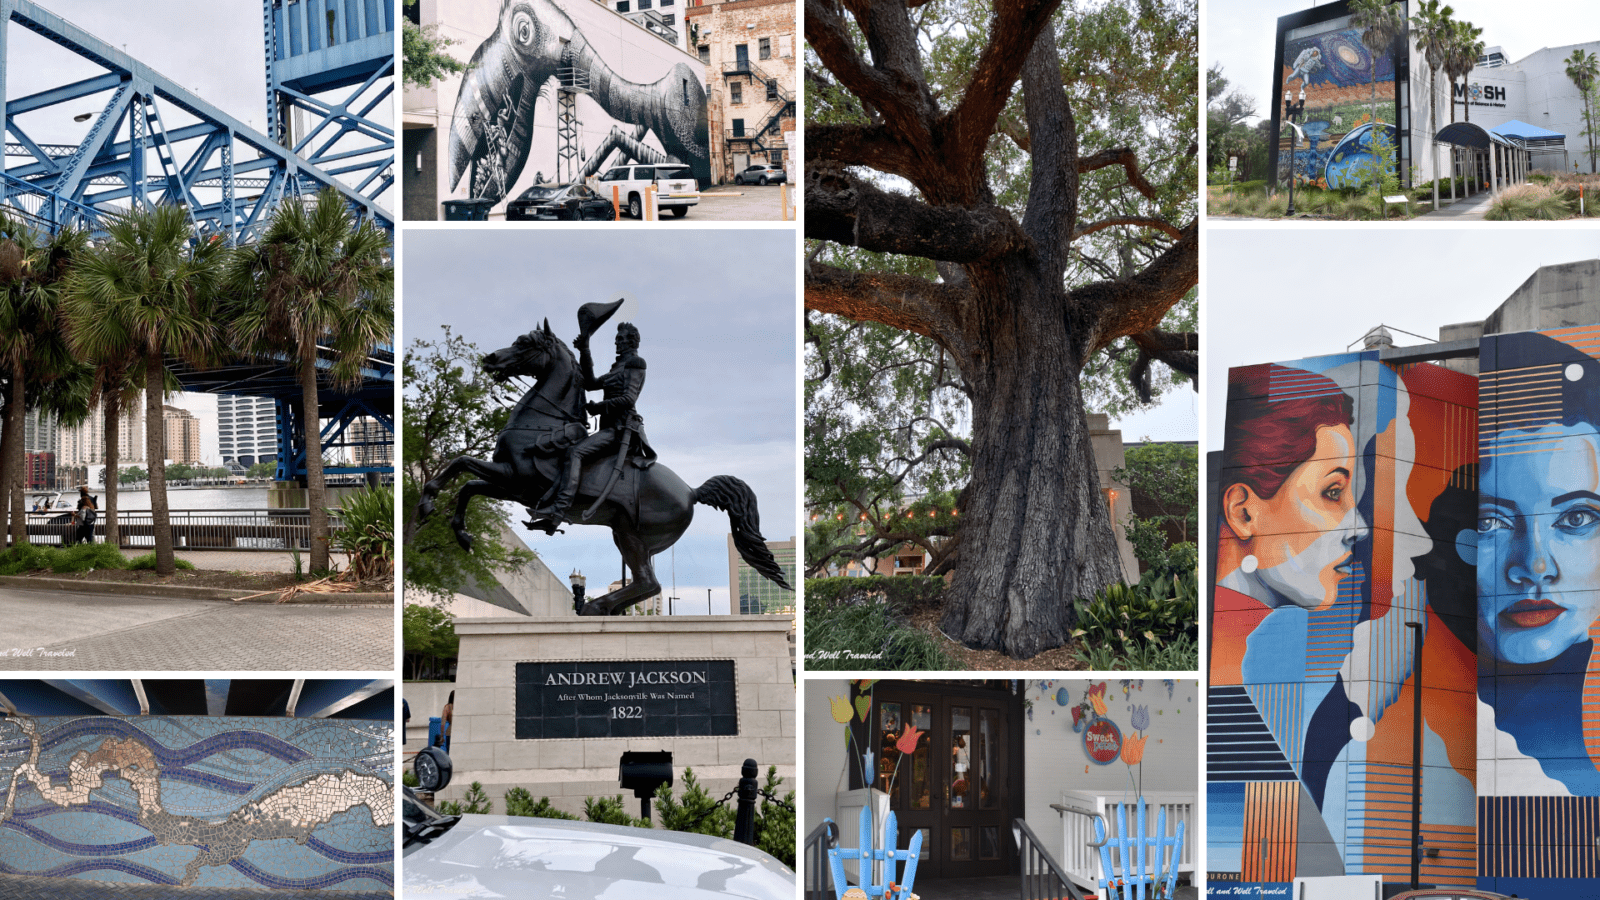 Jacksonville Florida statues, murals, and Main Street Bridge